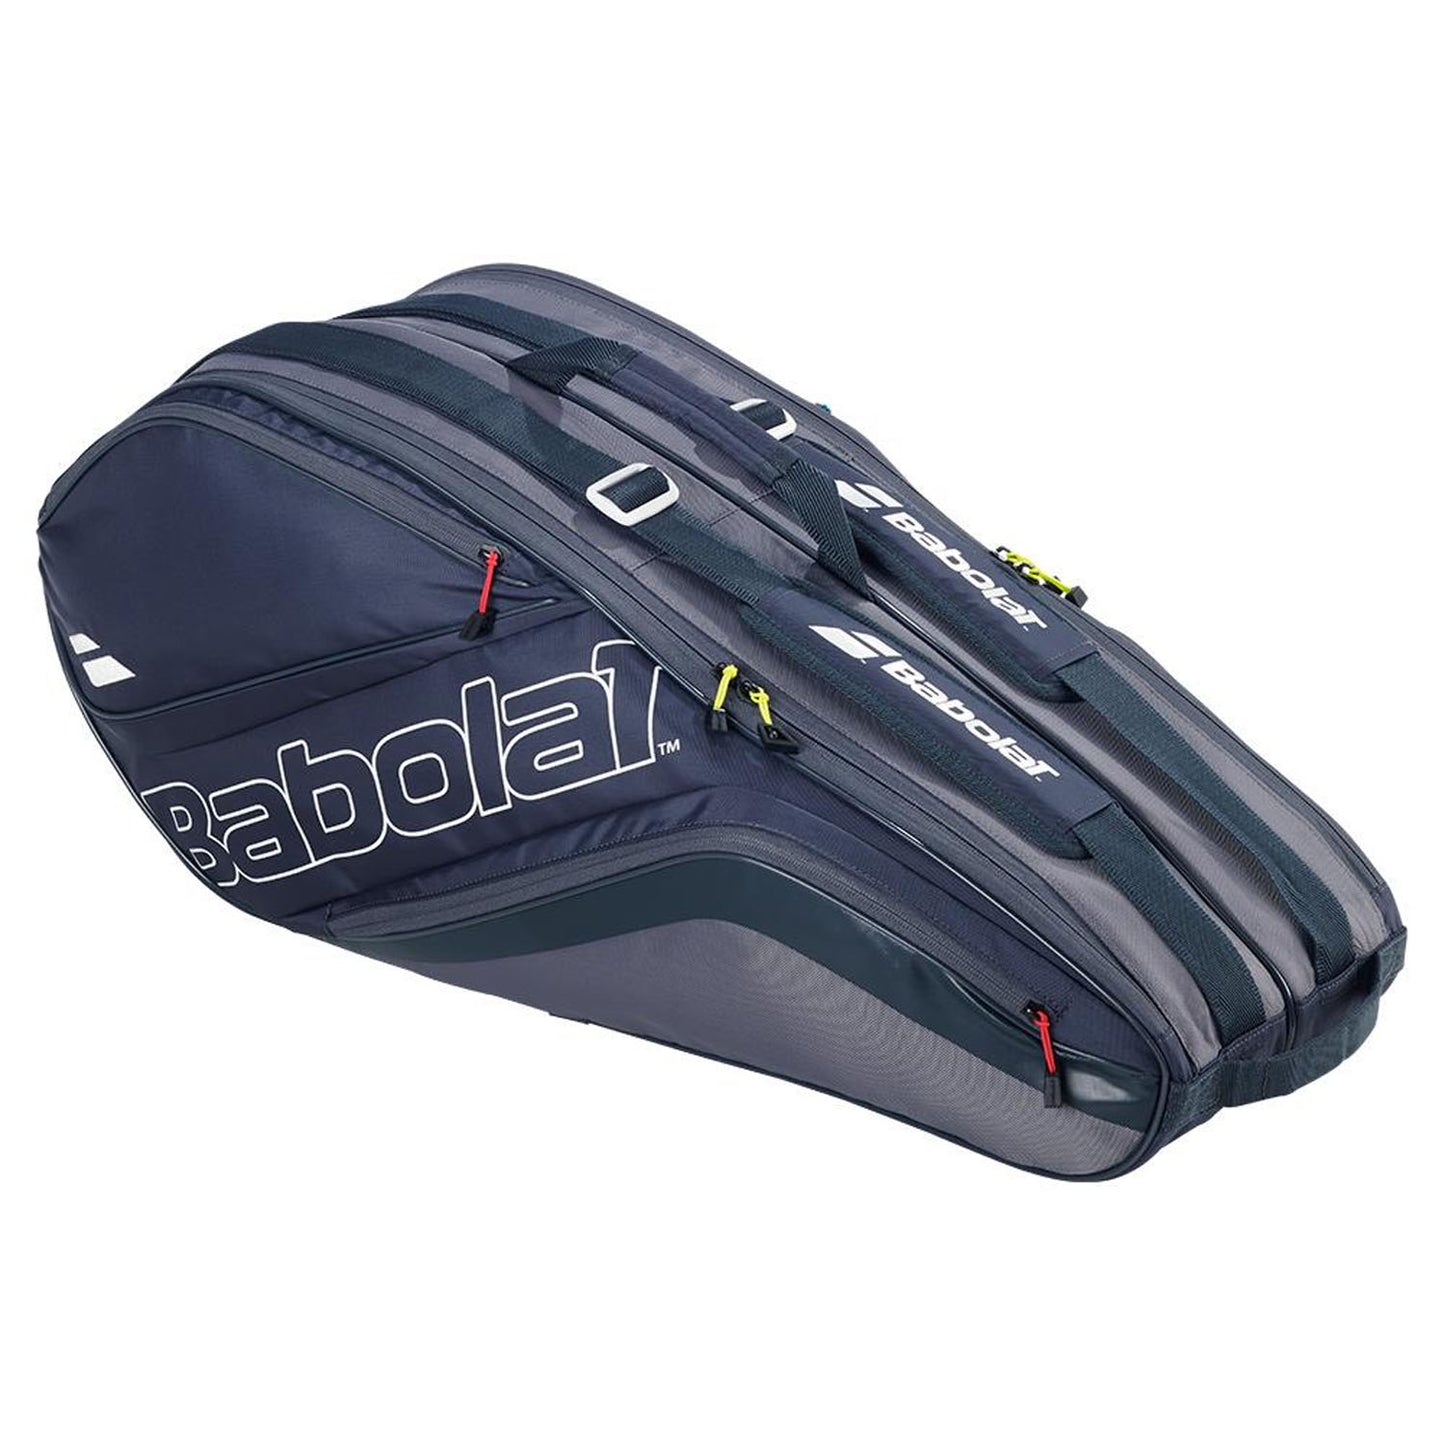 Babolat 751223-107 Evo Court L Tennis Bag, Gray - Best Price online Prokicksports.com